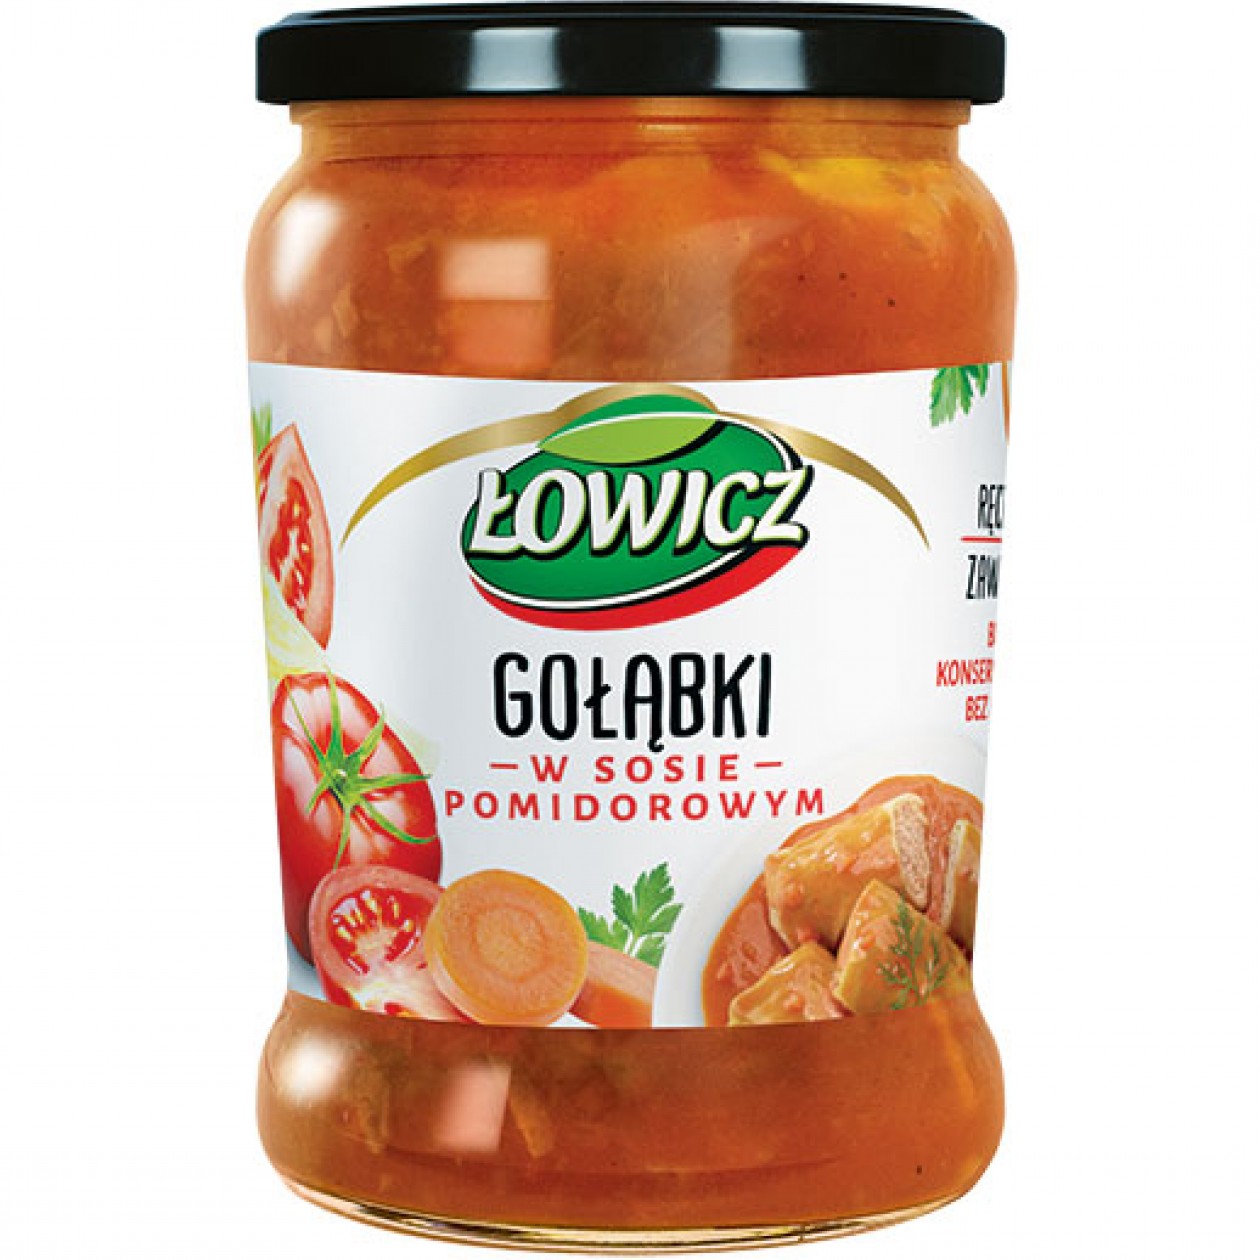 Lowicz Golobki Stuffed Cabbage In Tomato Sauce 8x580g